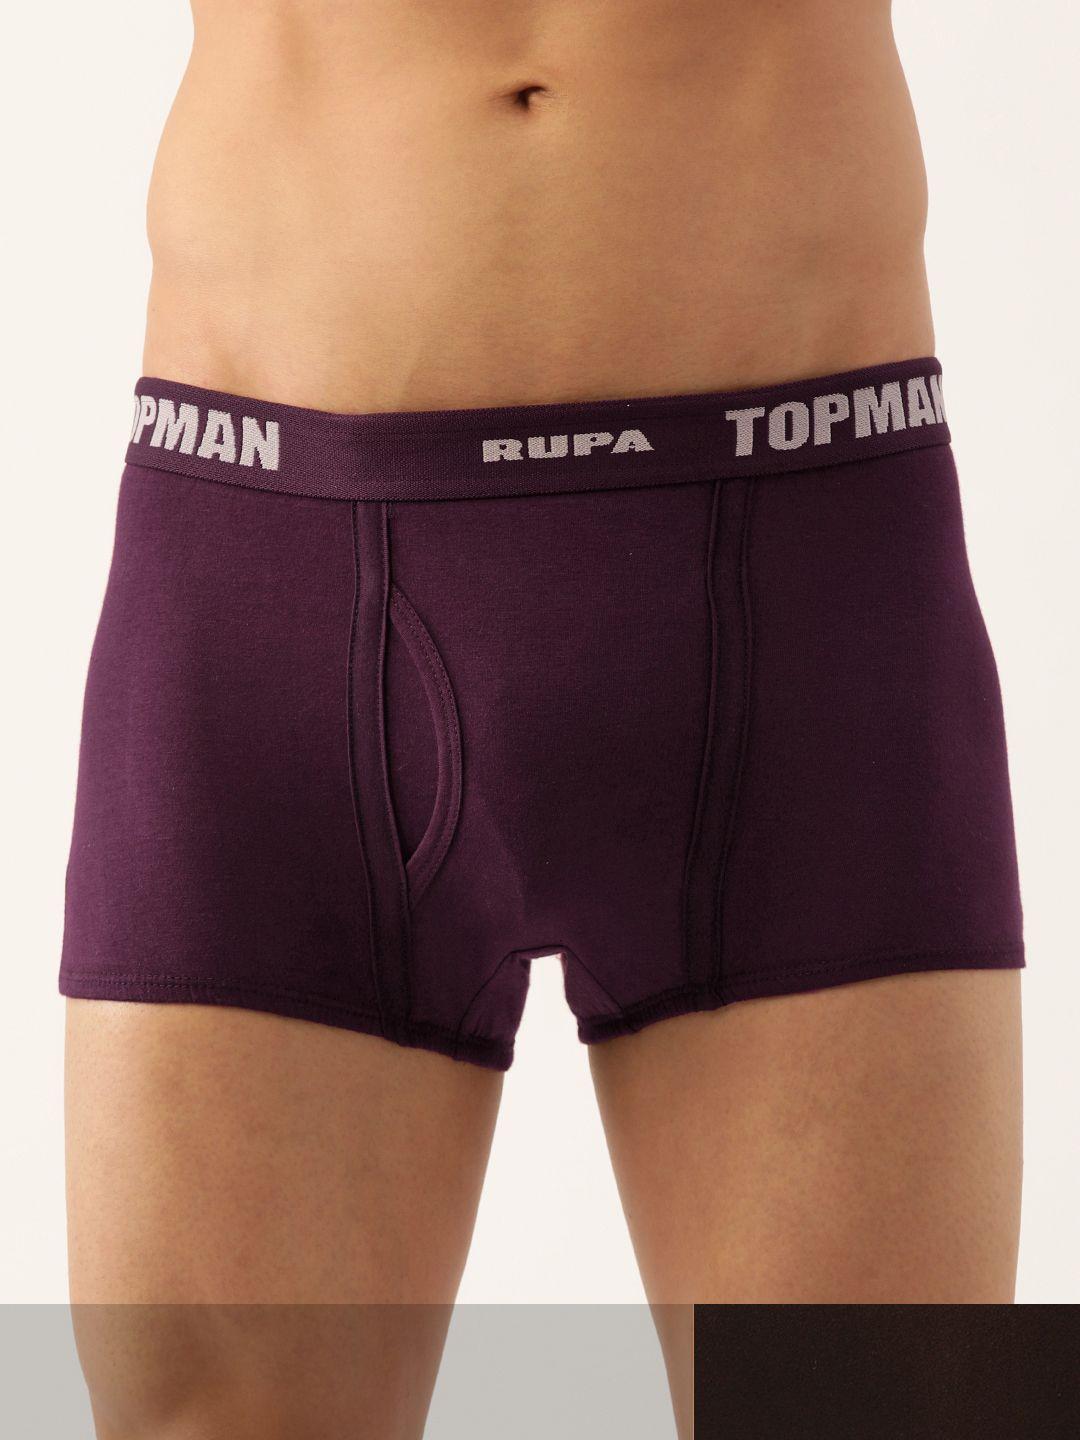 rupa men set of 2 brown & purple solid cotton trunks